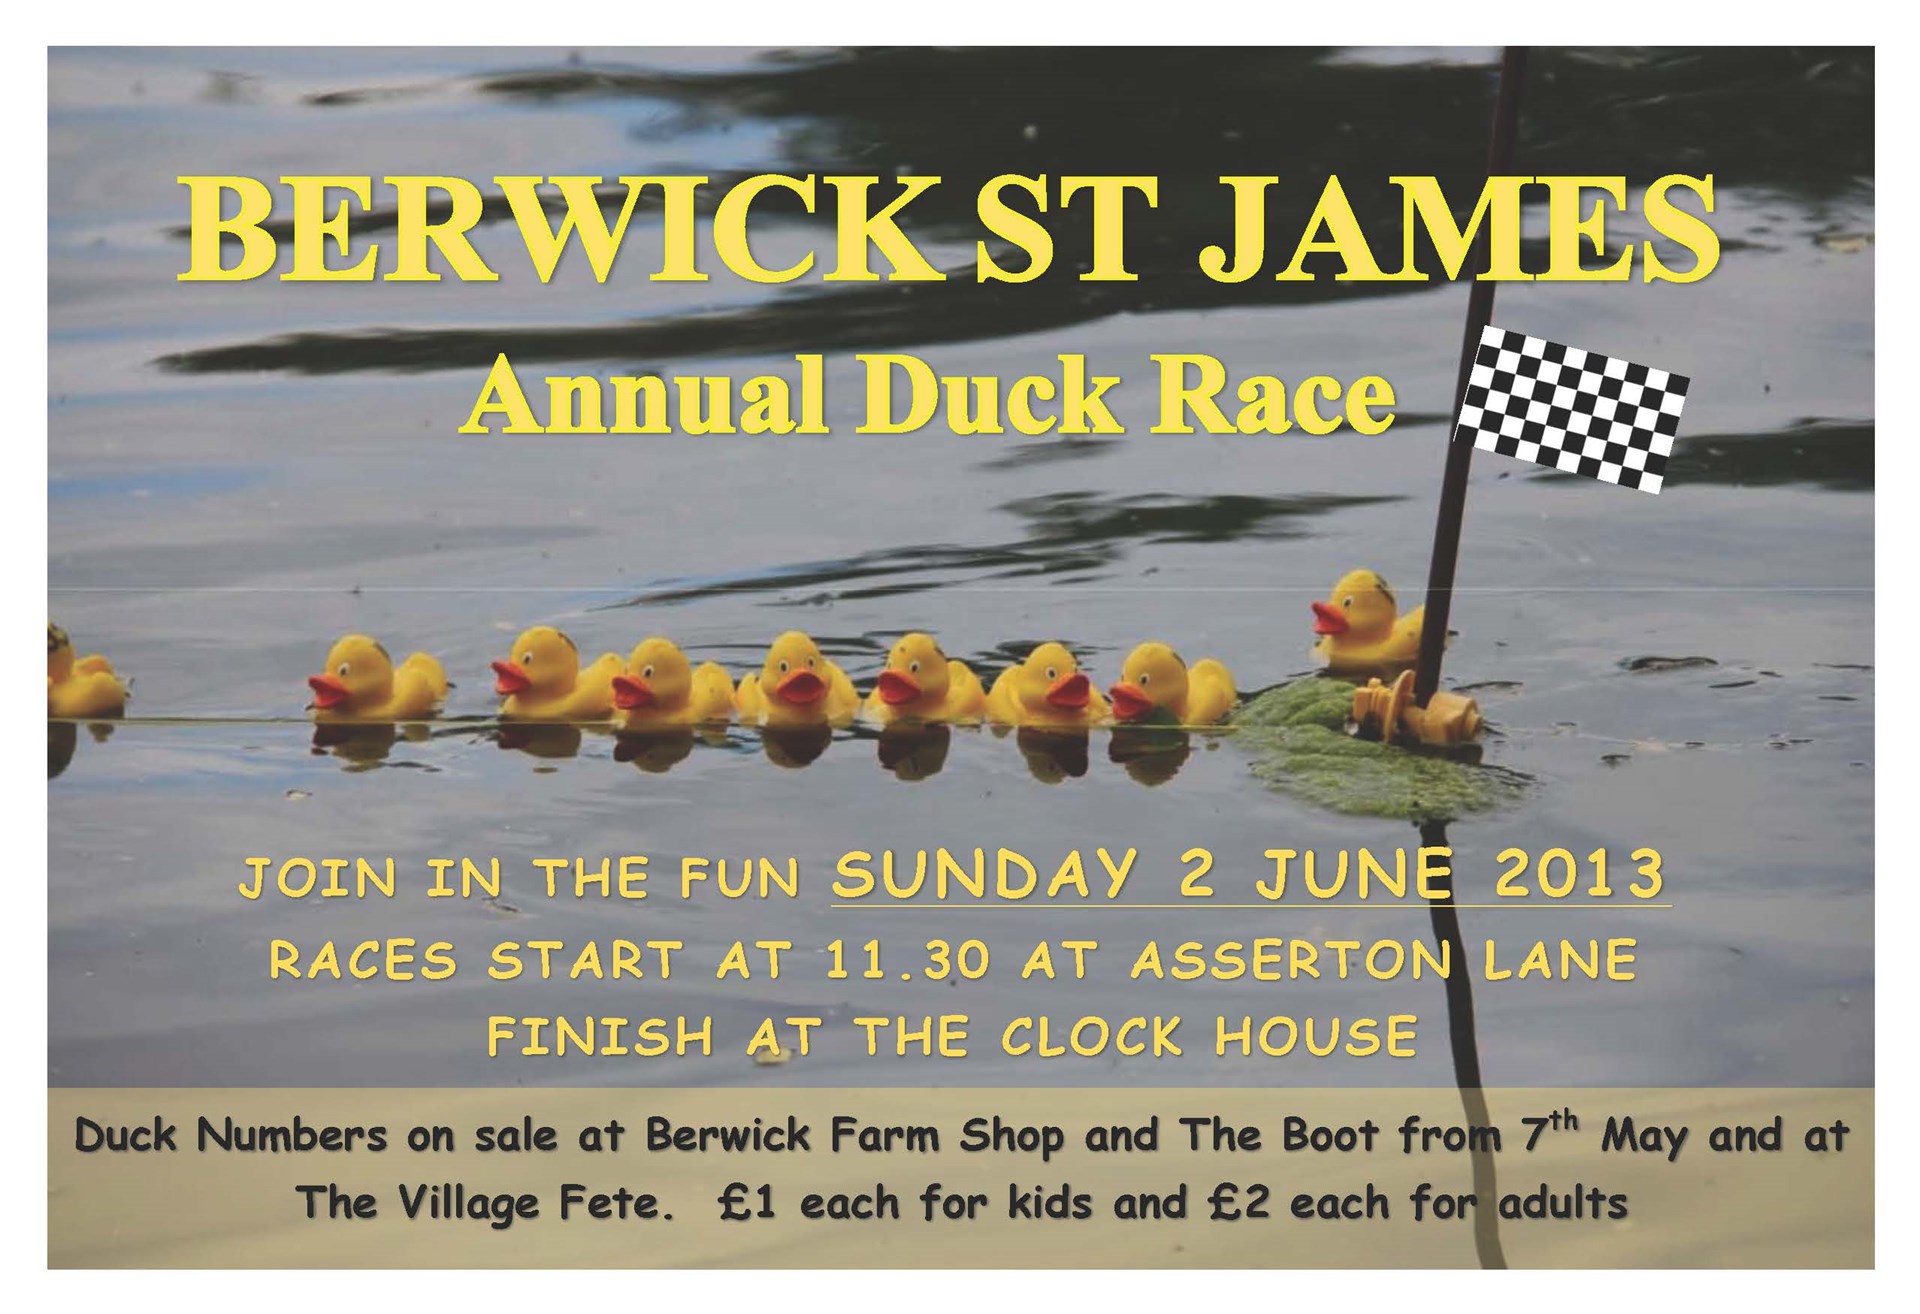 Berwick St James Parish Berwick Fete & Duck Race 2013